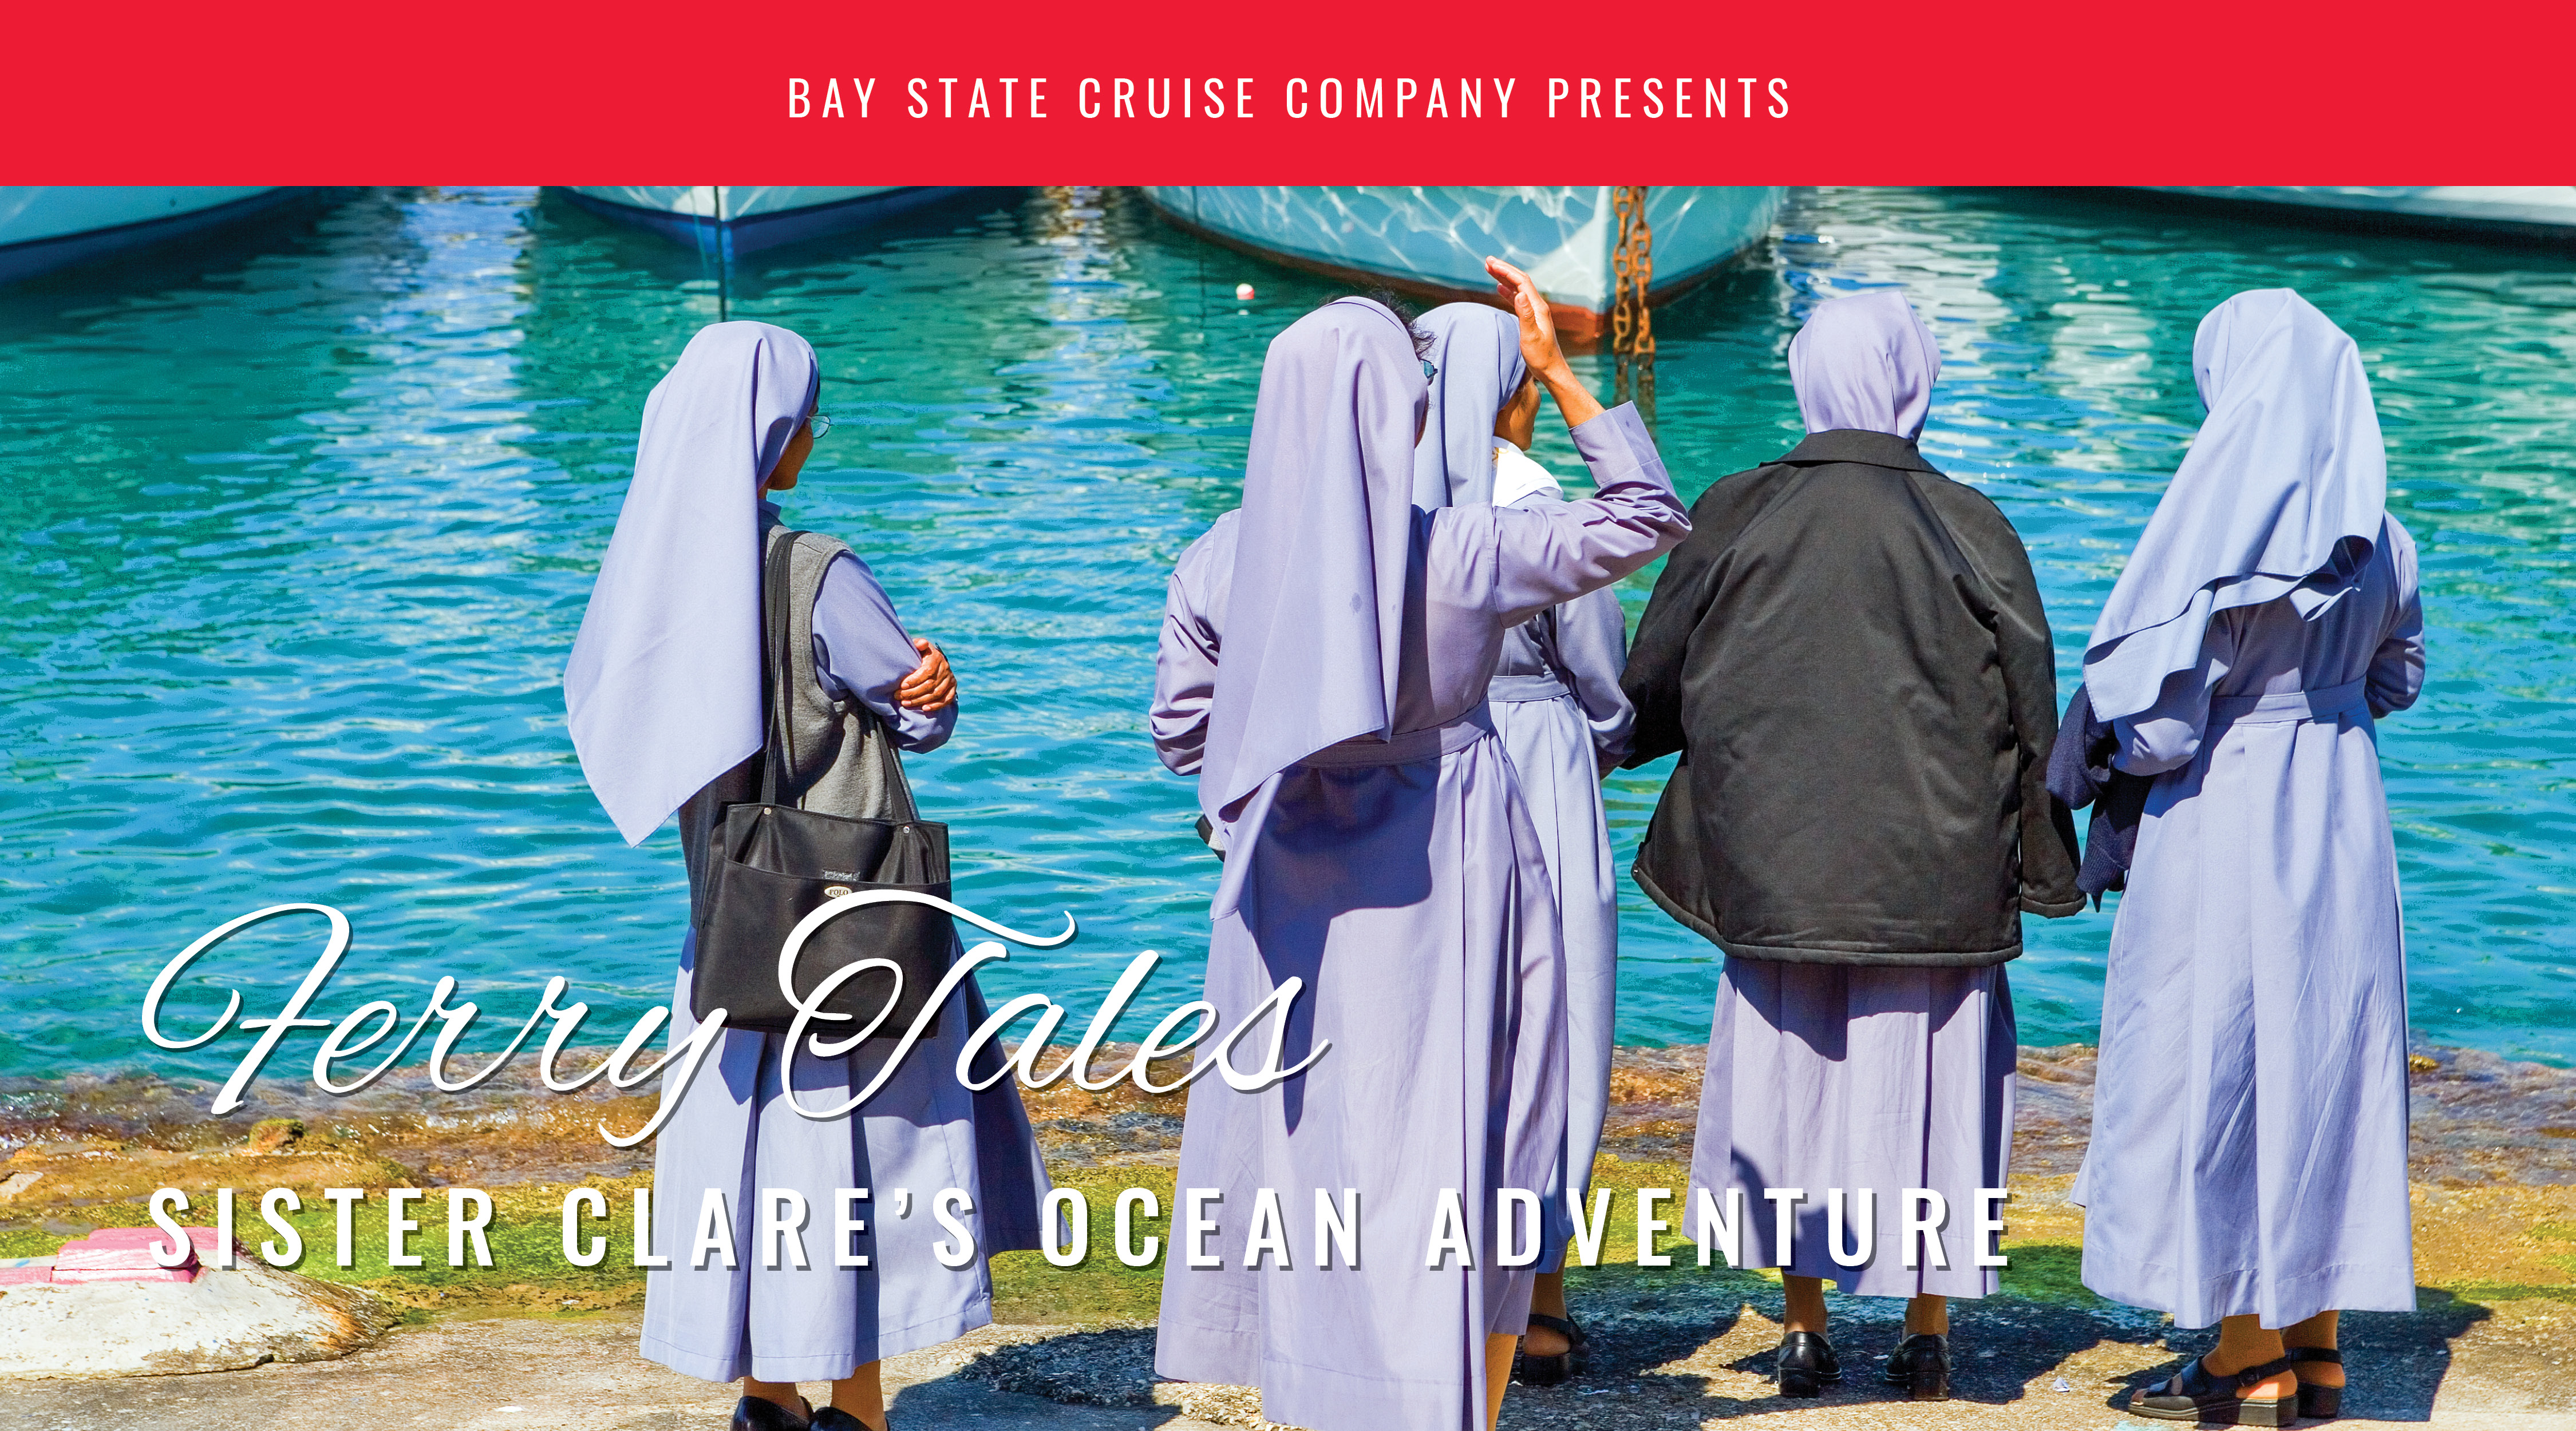 Sister Clare's Ocean Adventure